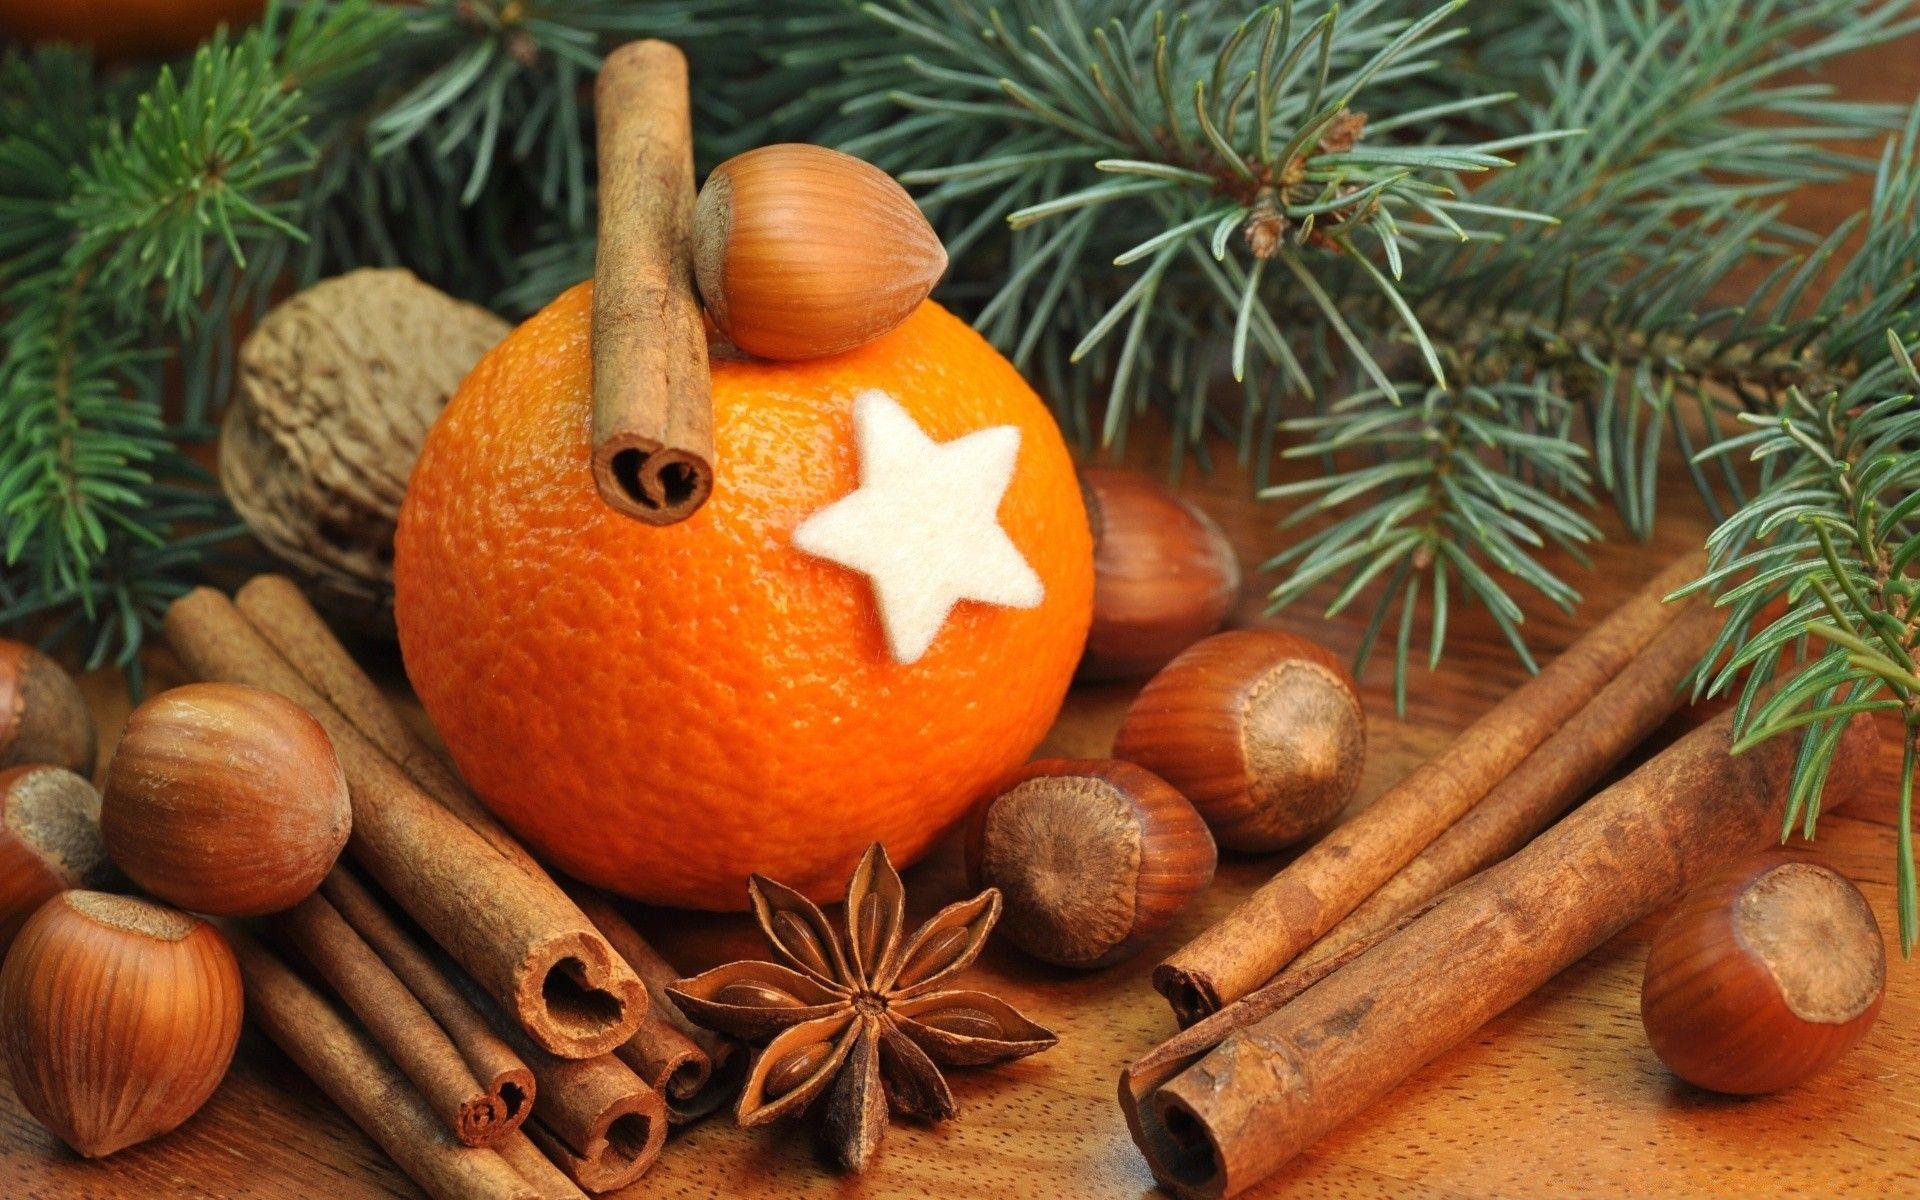 Orange With Cinnamon Sticks. iPhone wallpaper for free